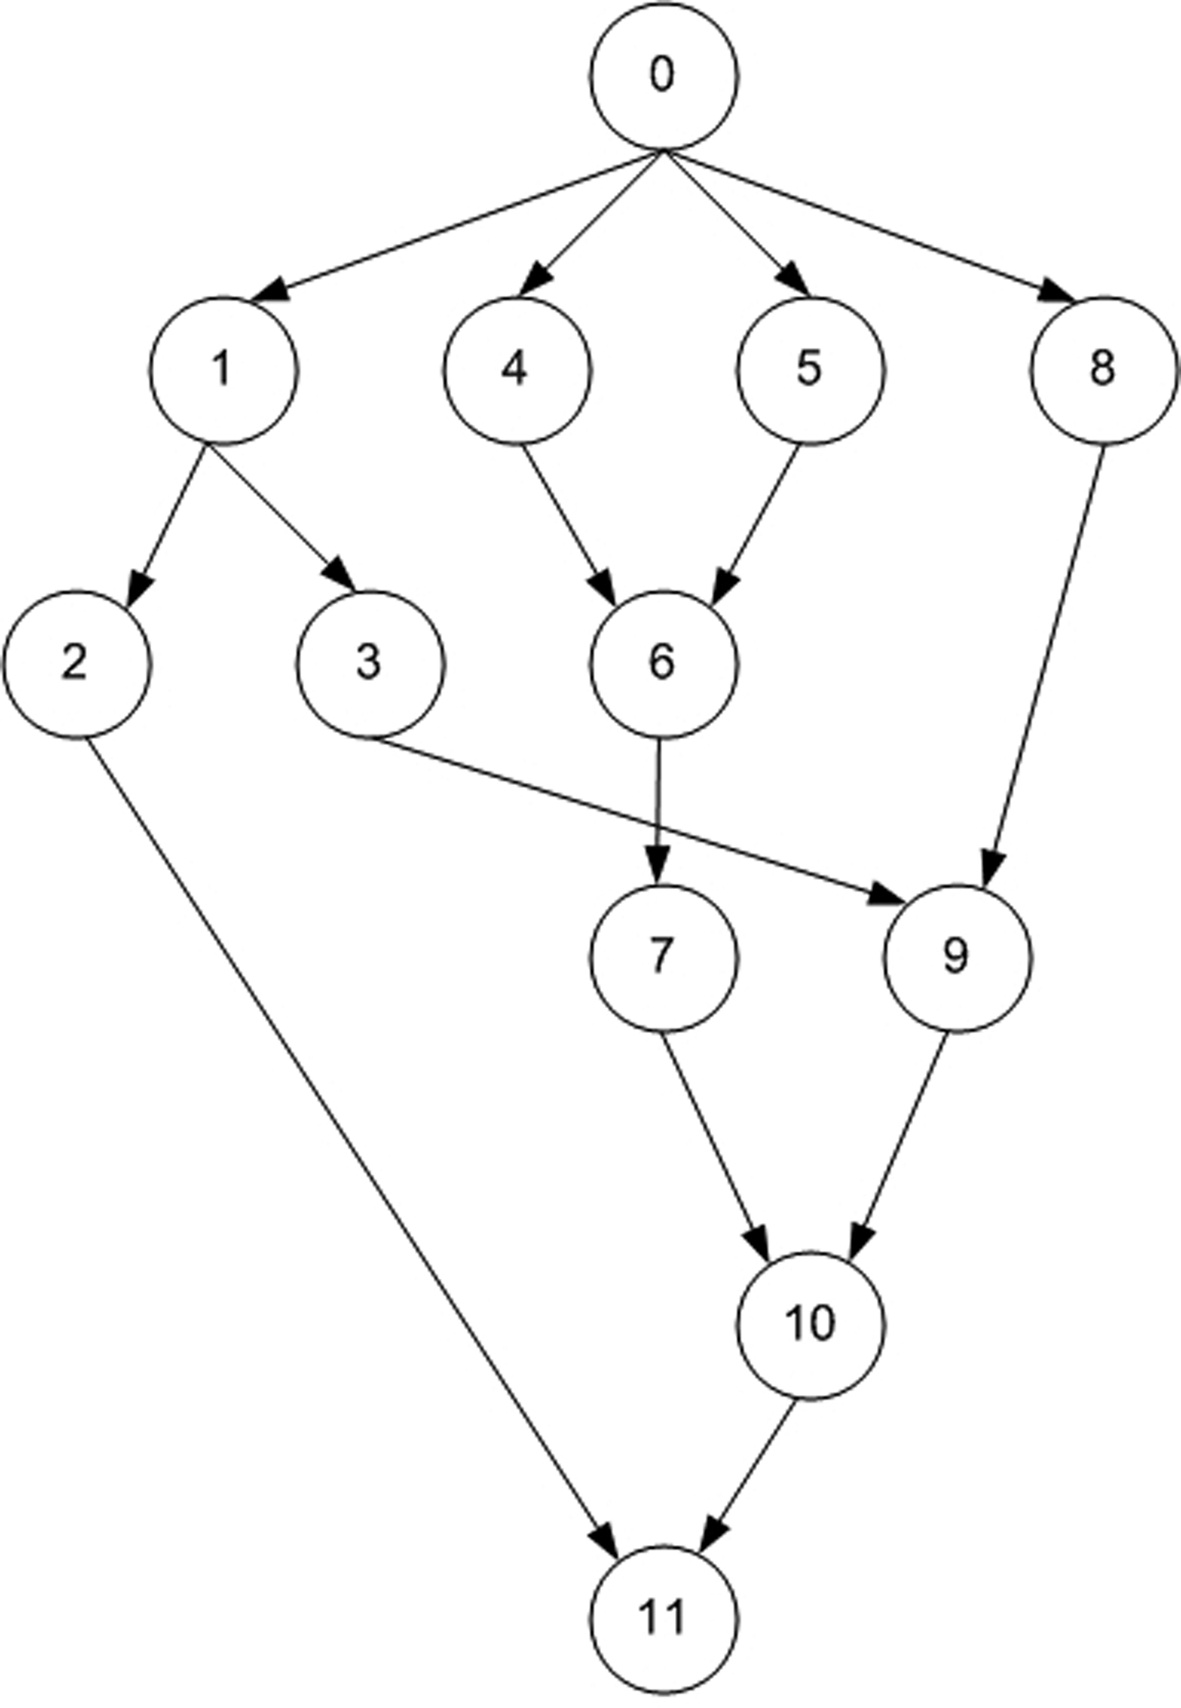 Standard task graph.